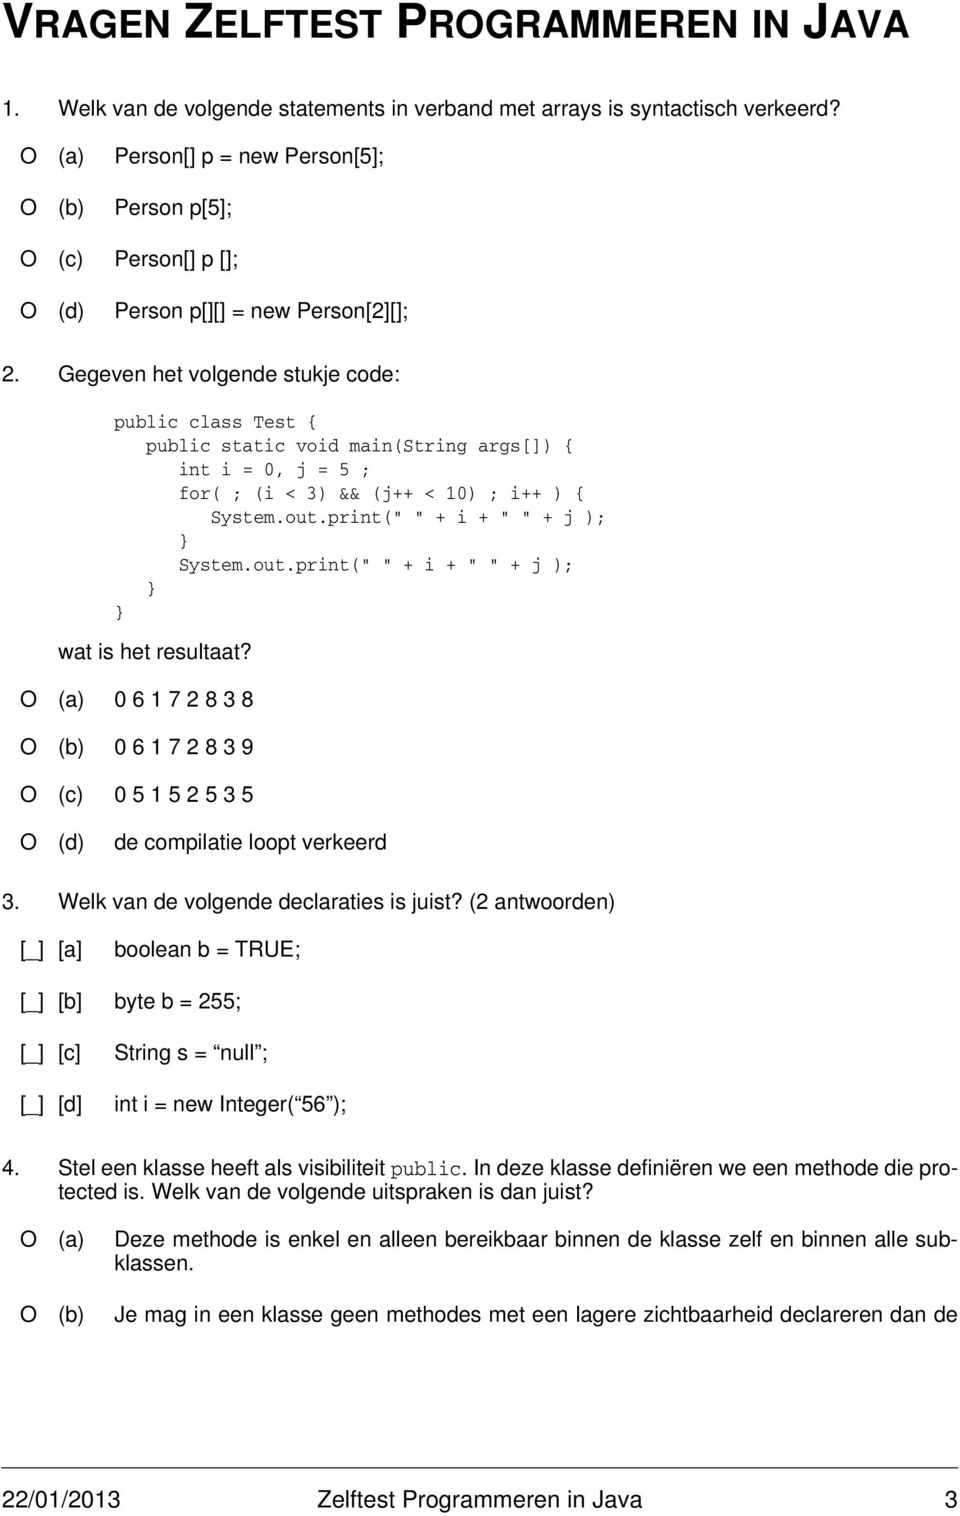 Gegeven het volgende stukje code: public class Test { public static void main(string args[]) { int i = 0, j = 5 ; for( ; (i < 3) && (j++ < 10) ; i++ ) { System.out.print(" " + i + " " + j ); System.